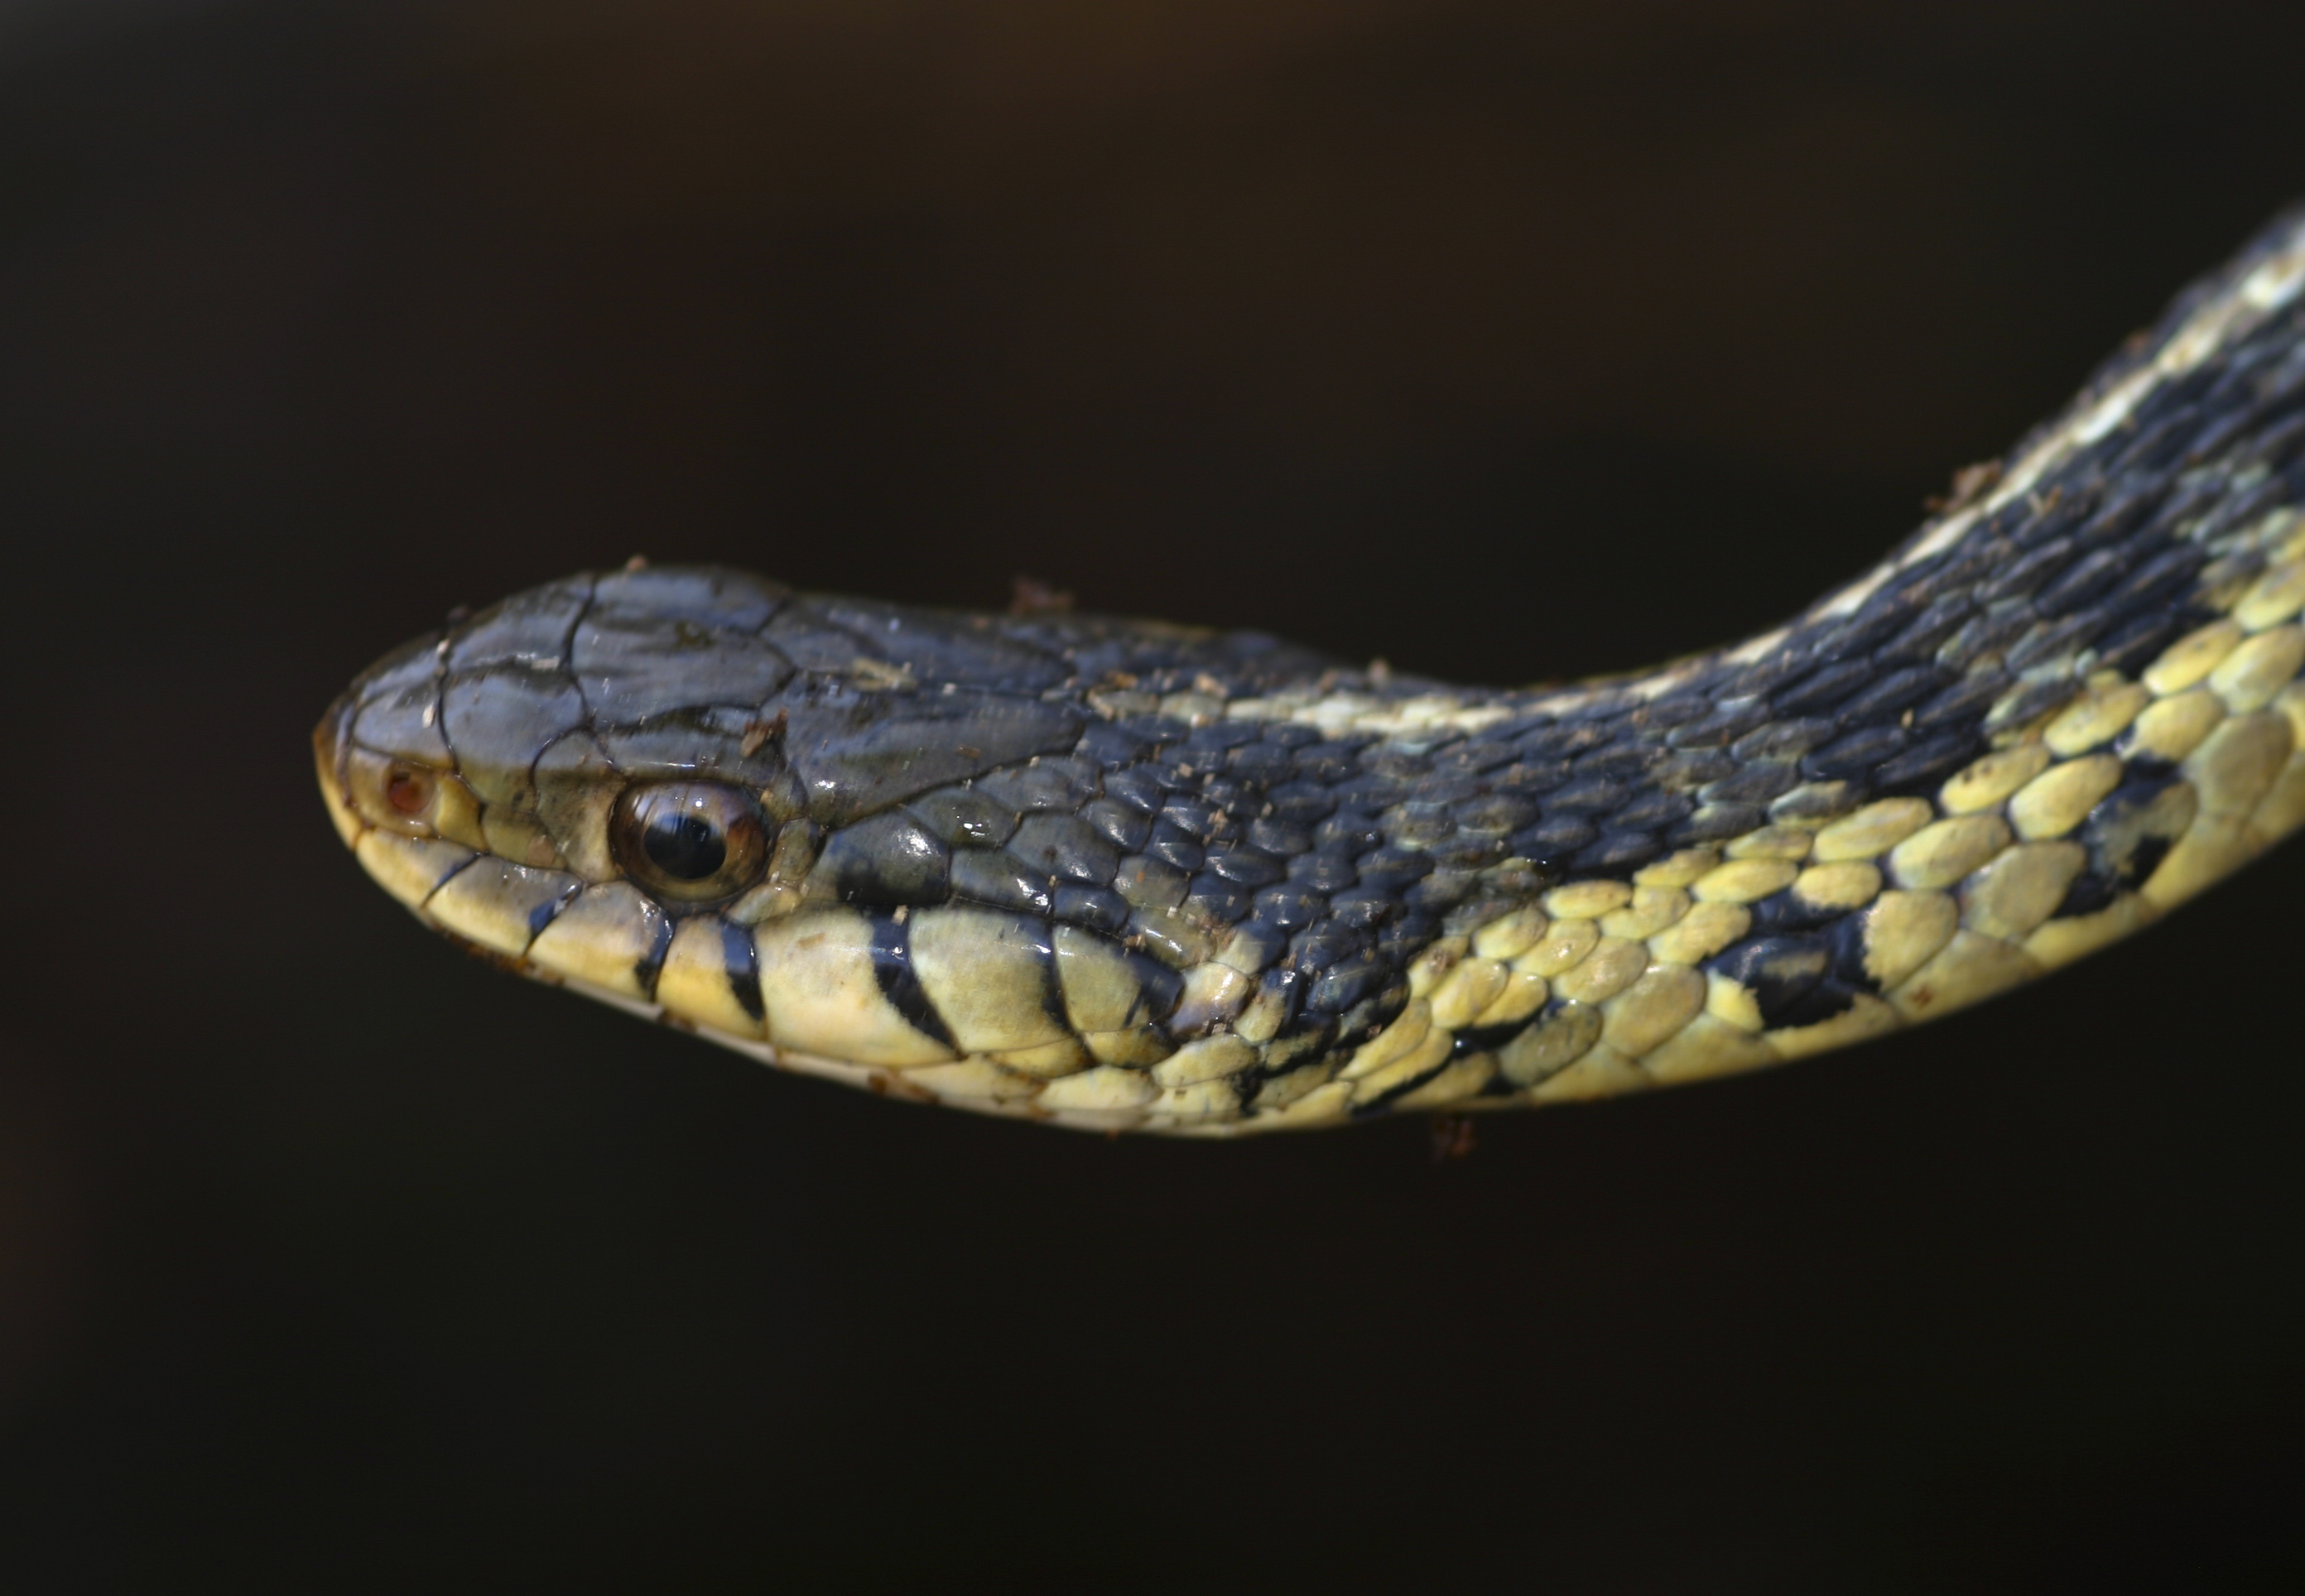 garden snakes pics download